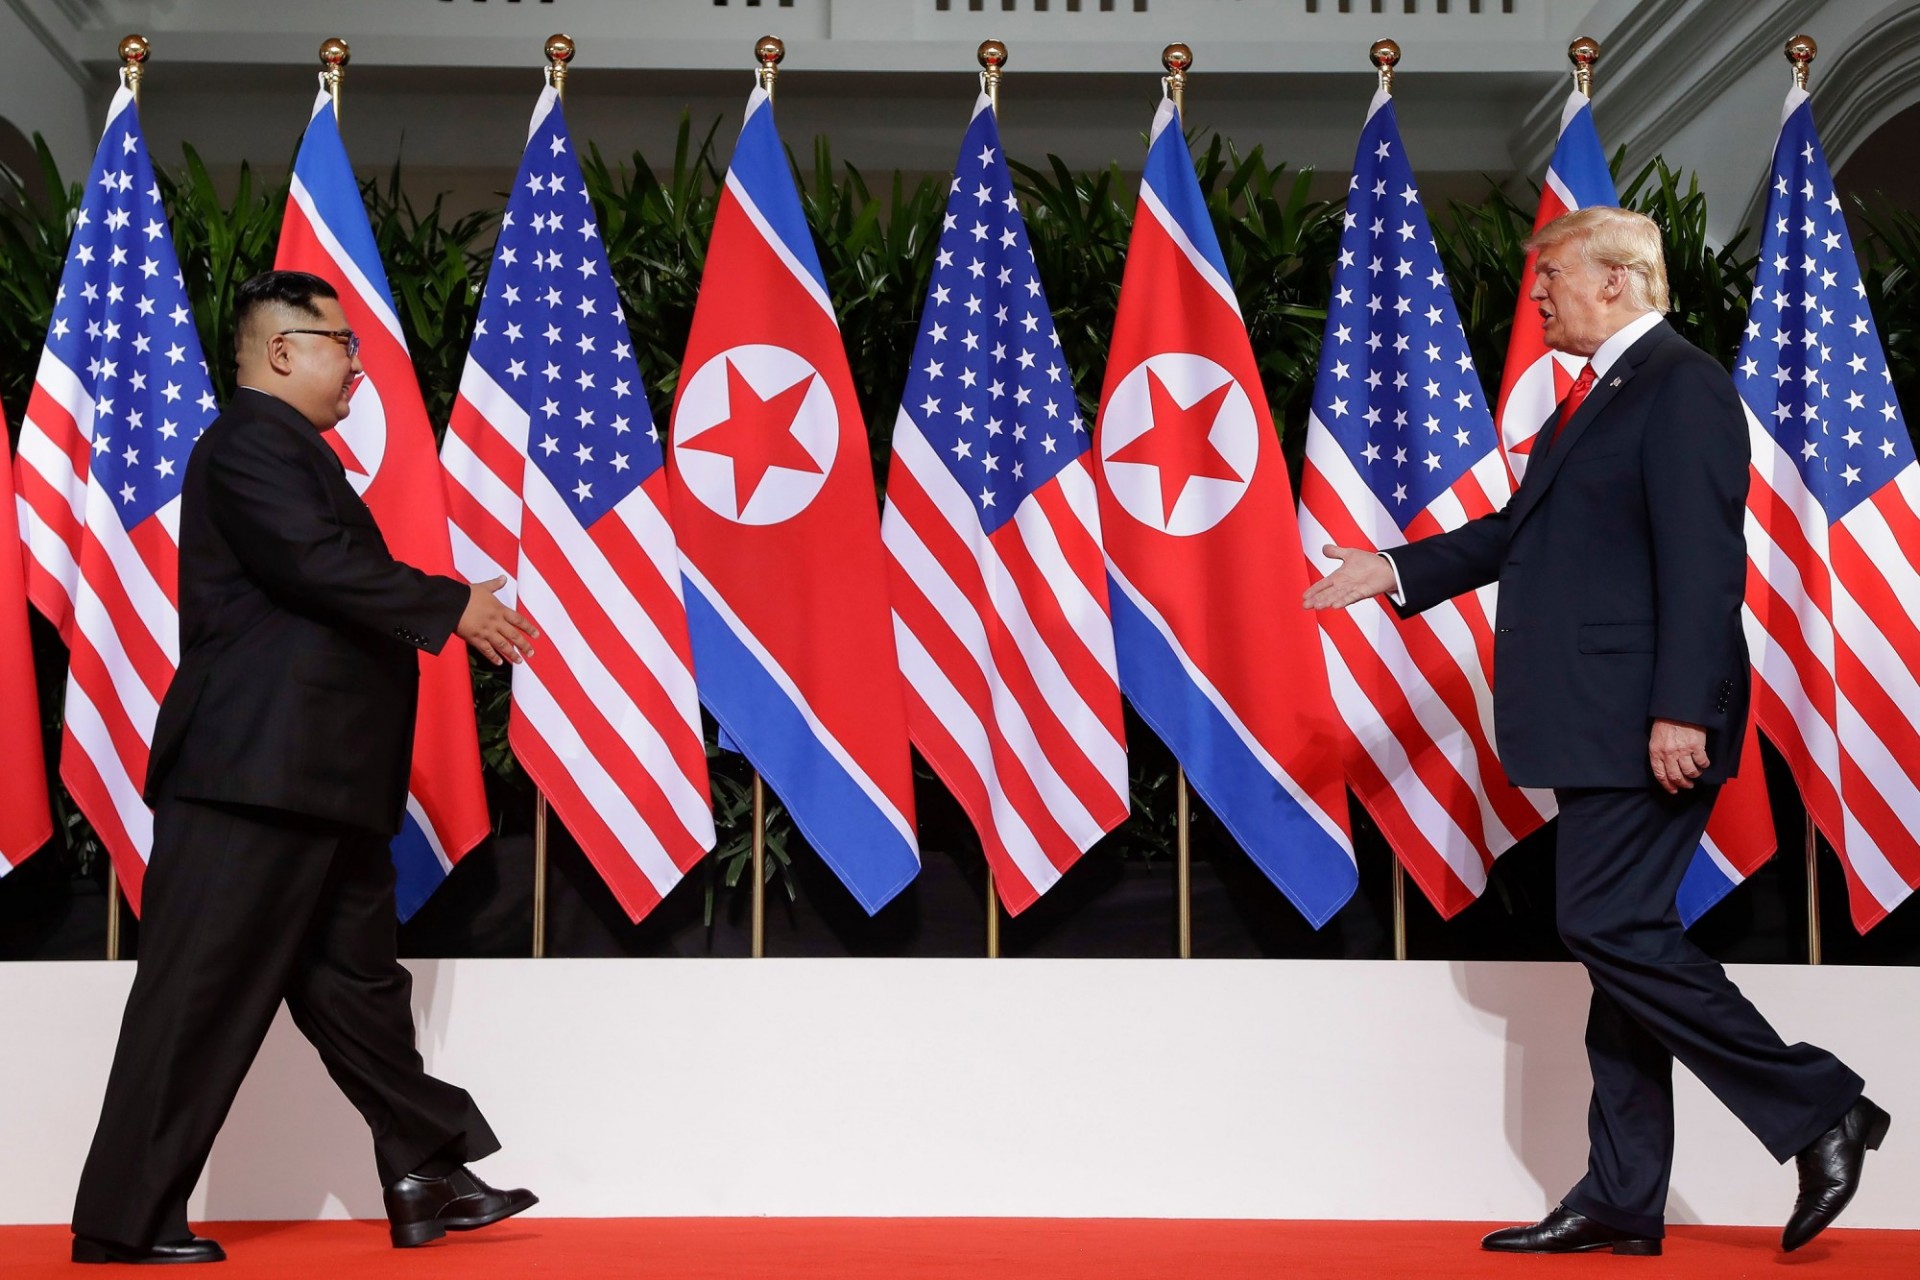 Trump and Kim shaking hands